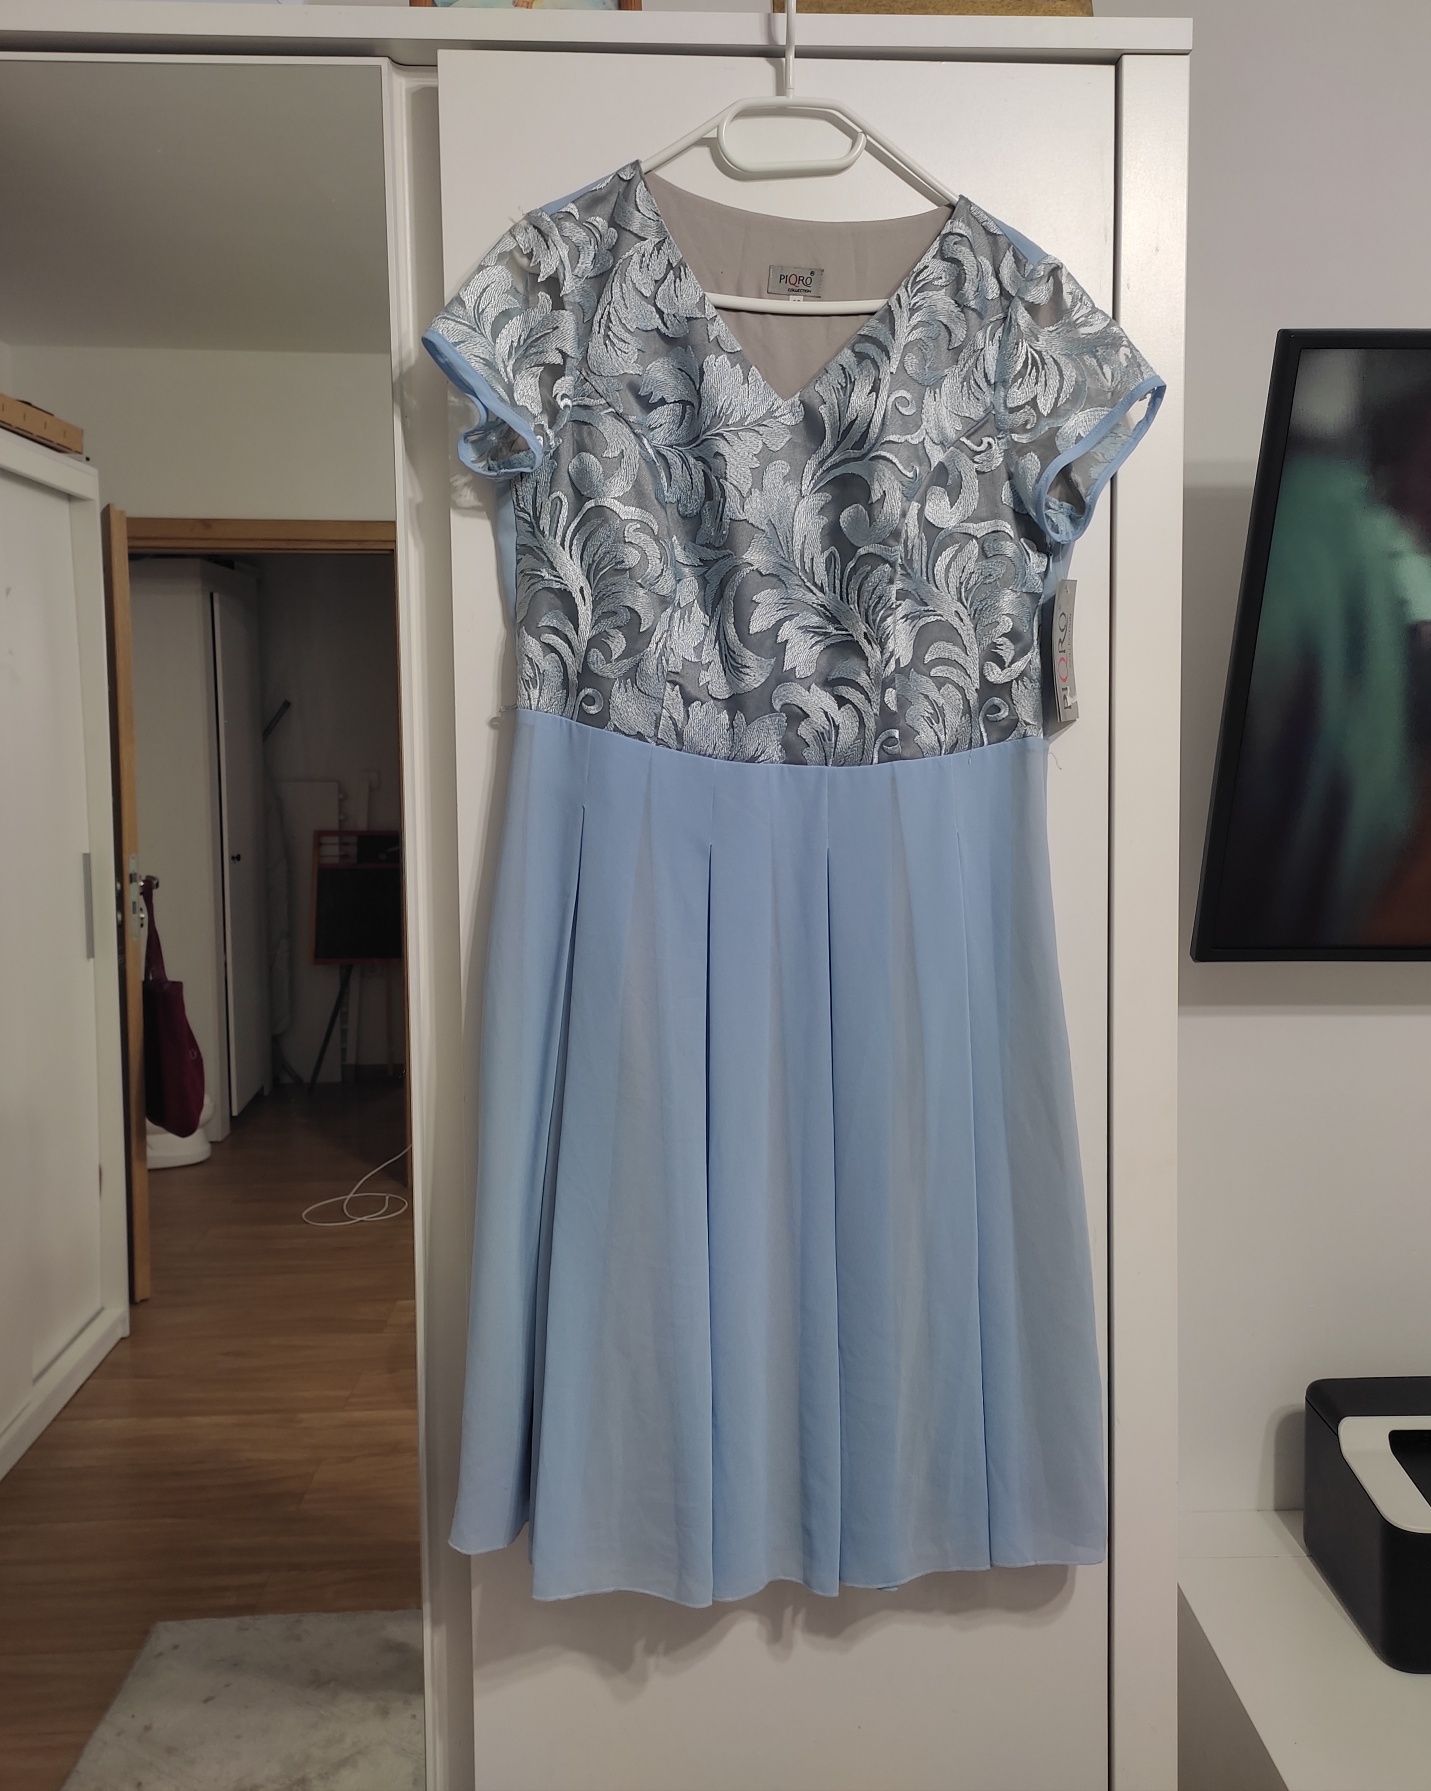 Piqro collection błękitna sukienka z koronką nowa z metką L